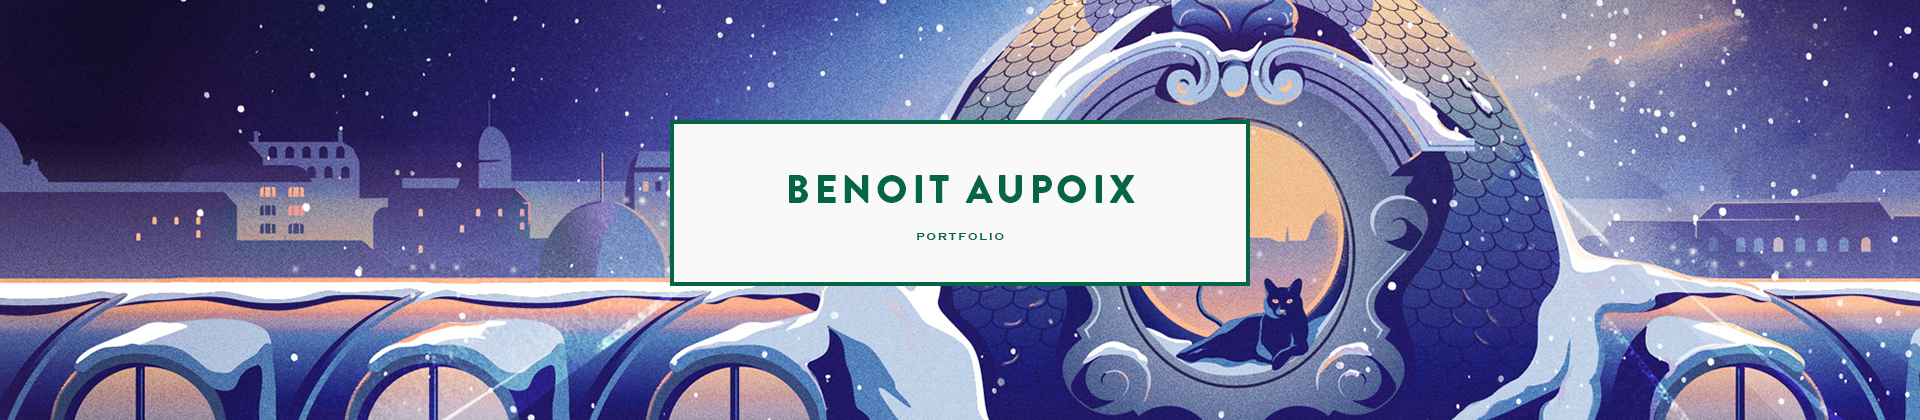 Benoit Aupoix